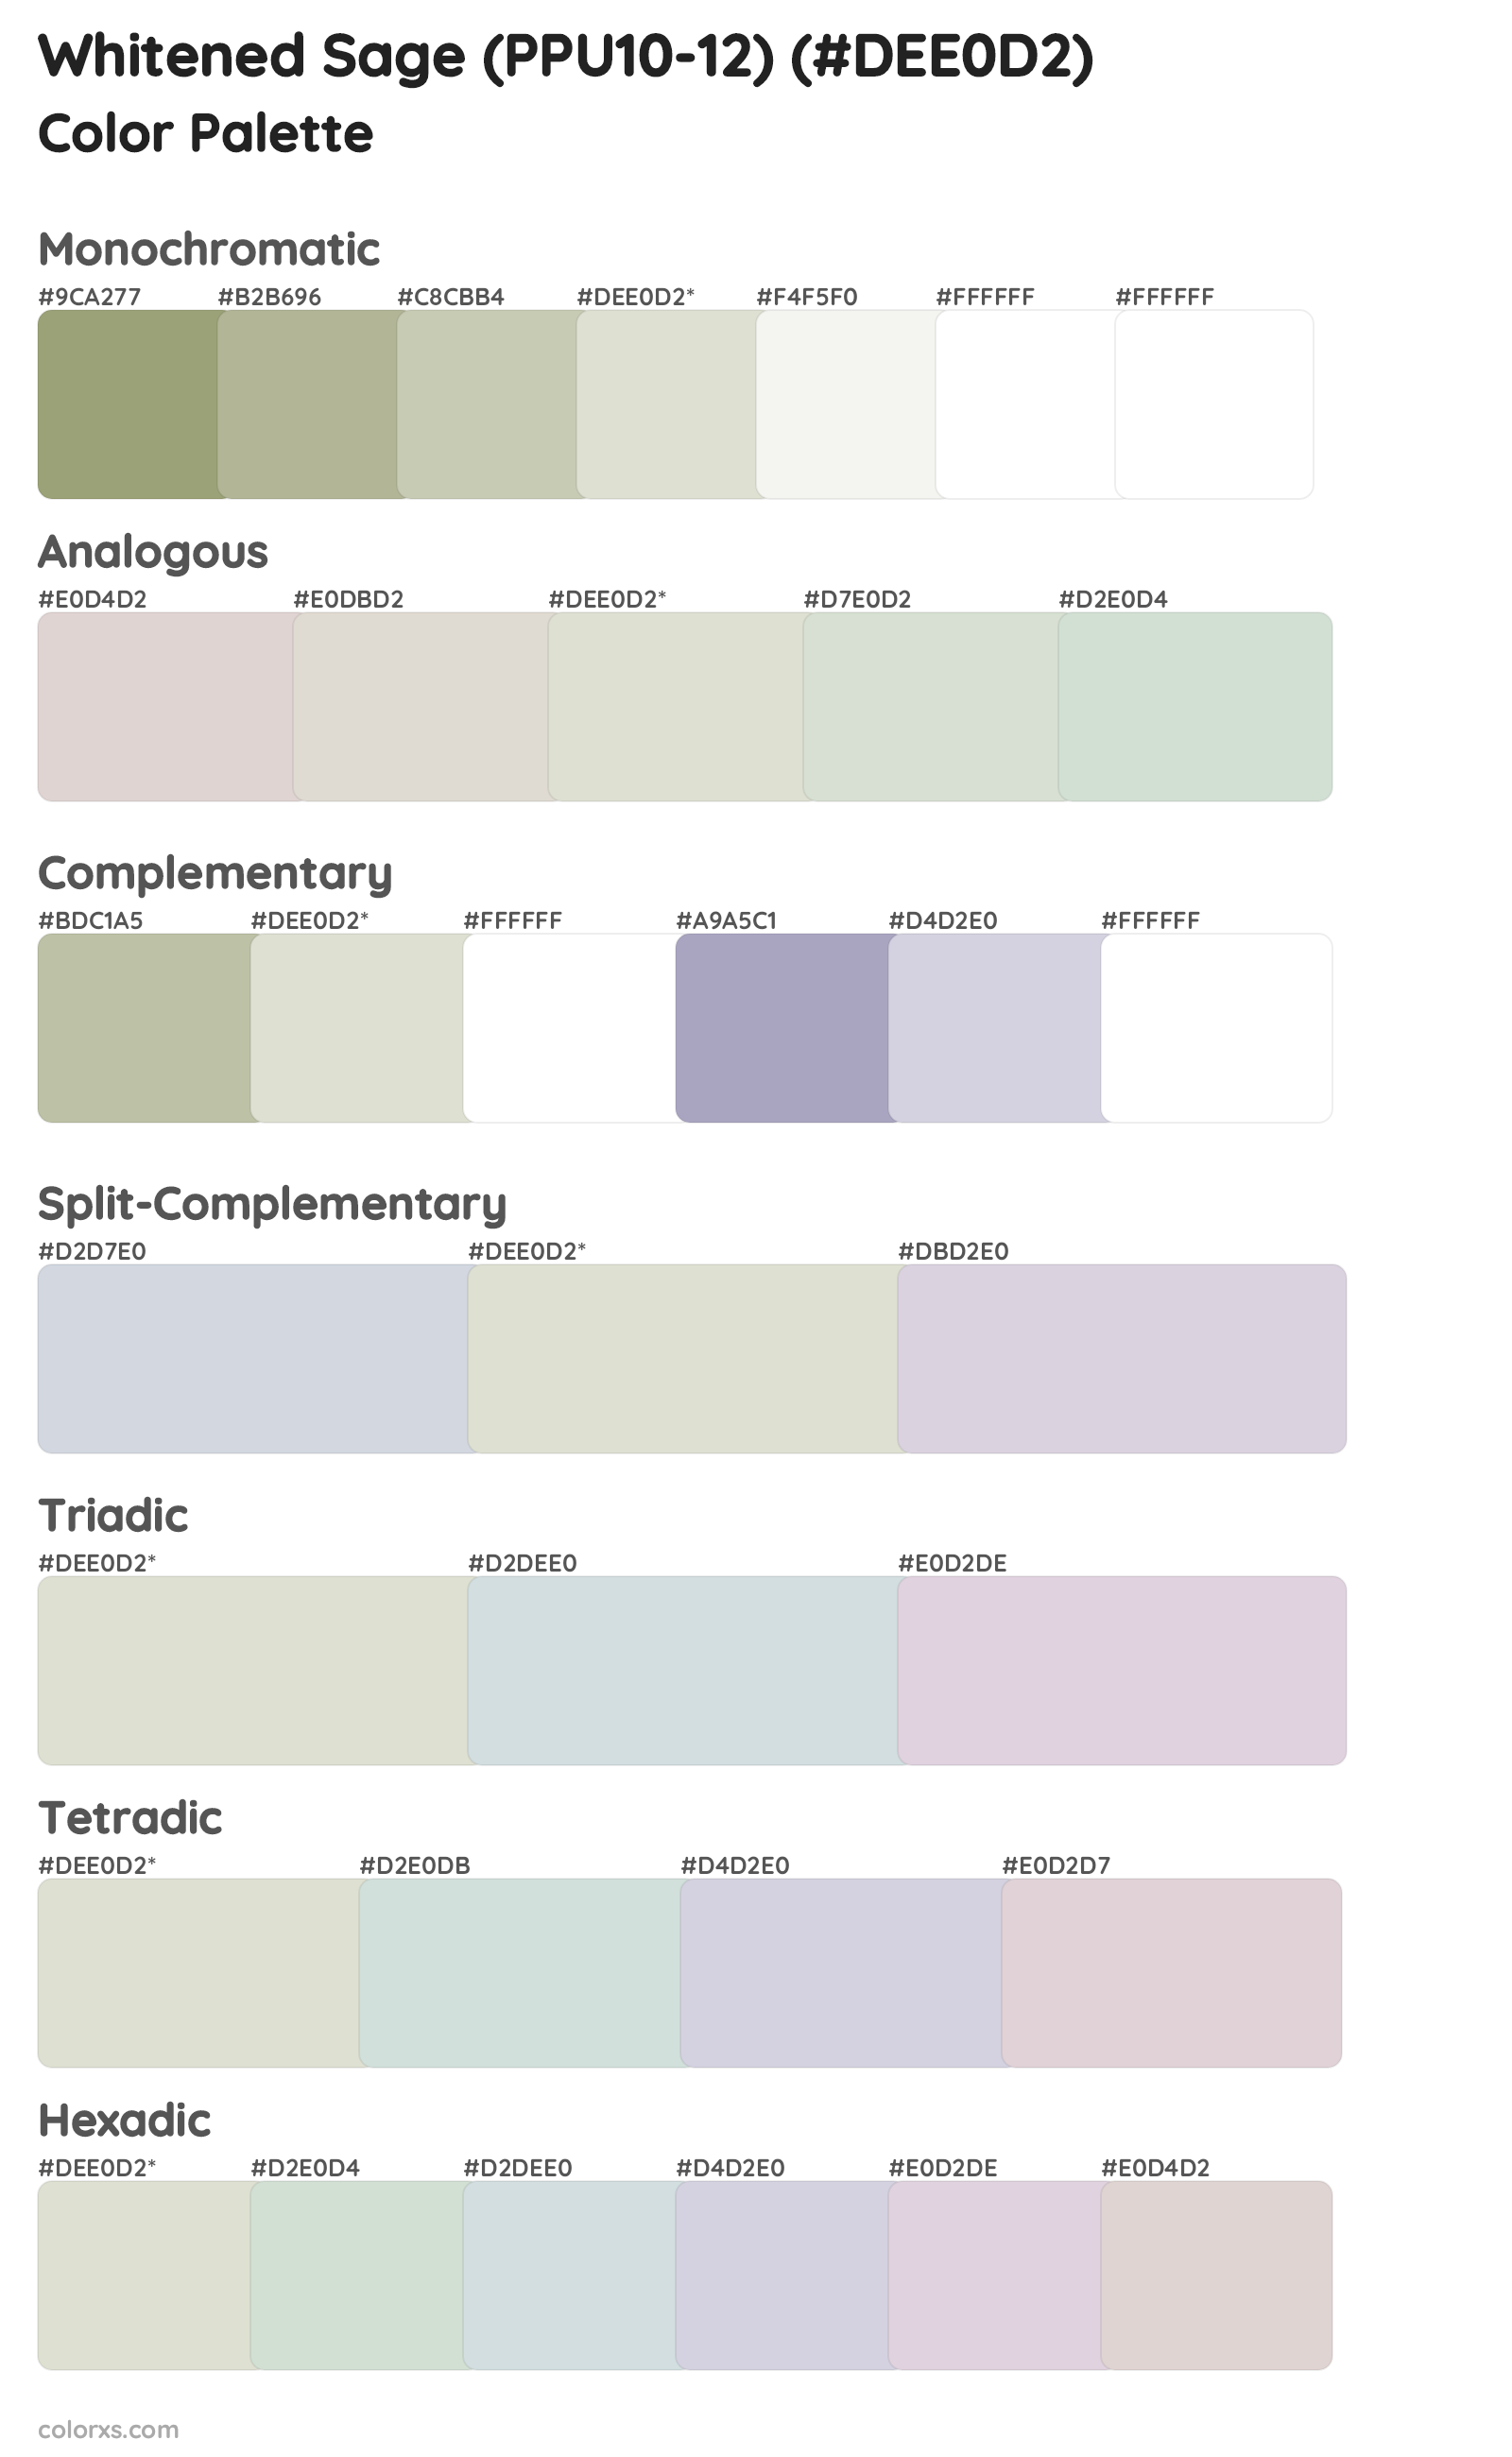 Whitened Sage (PPU10-12) Color Scheme Palettes